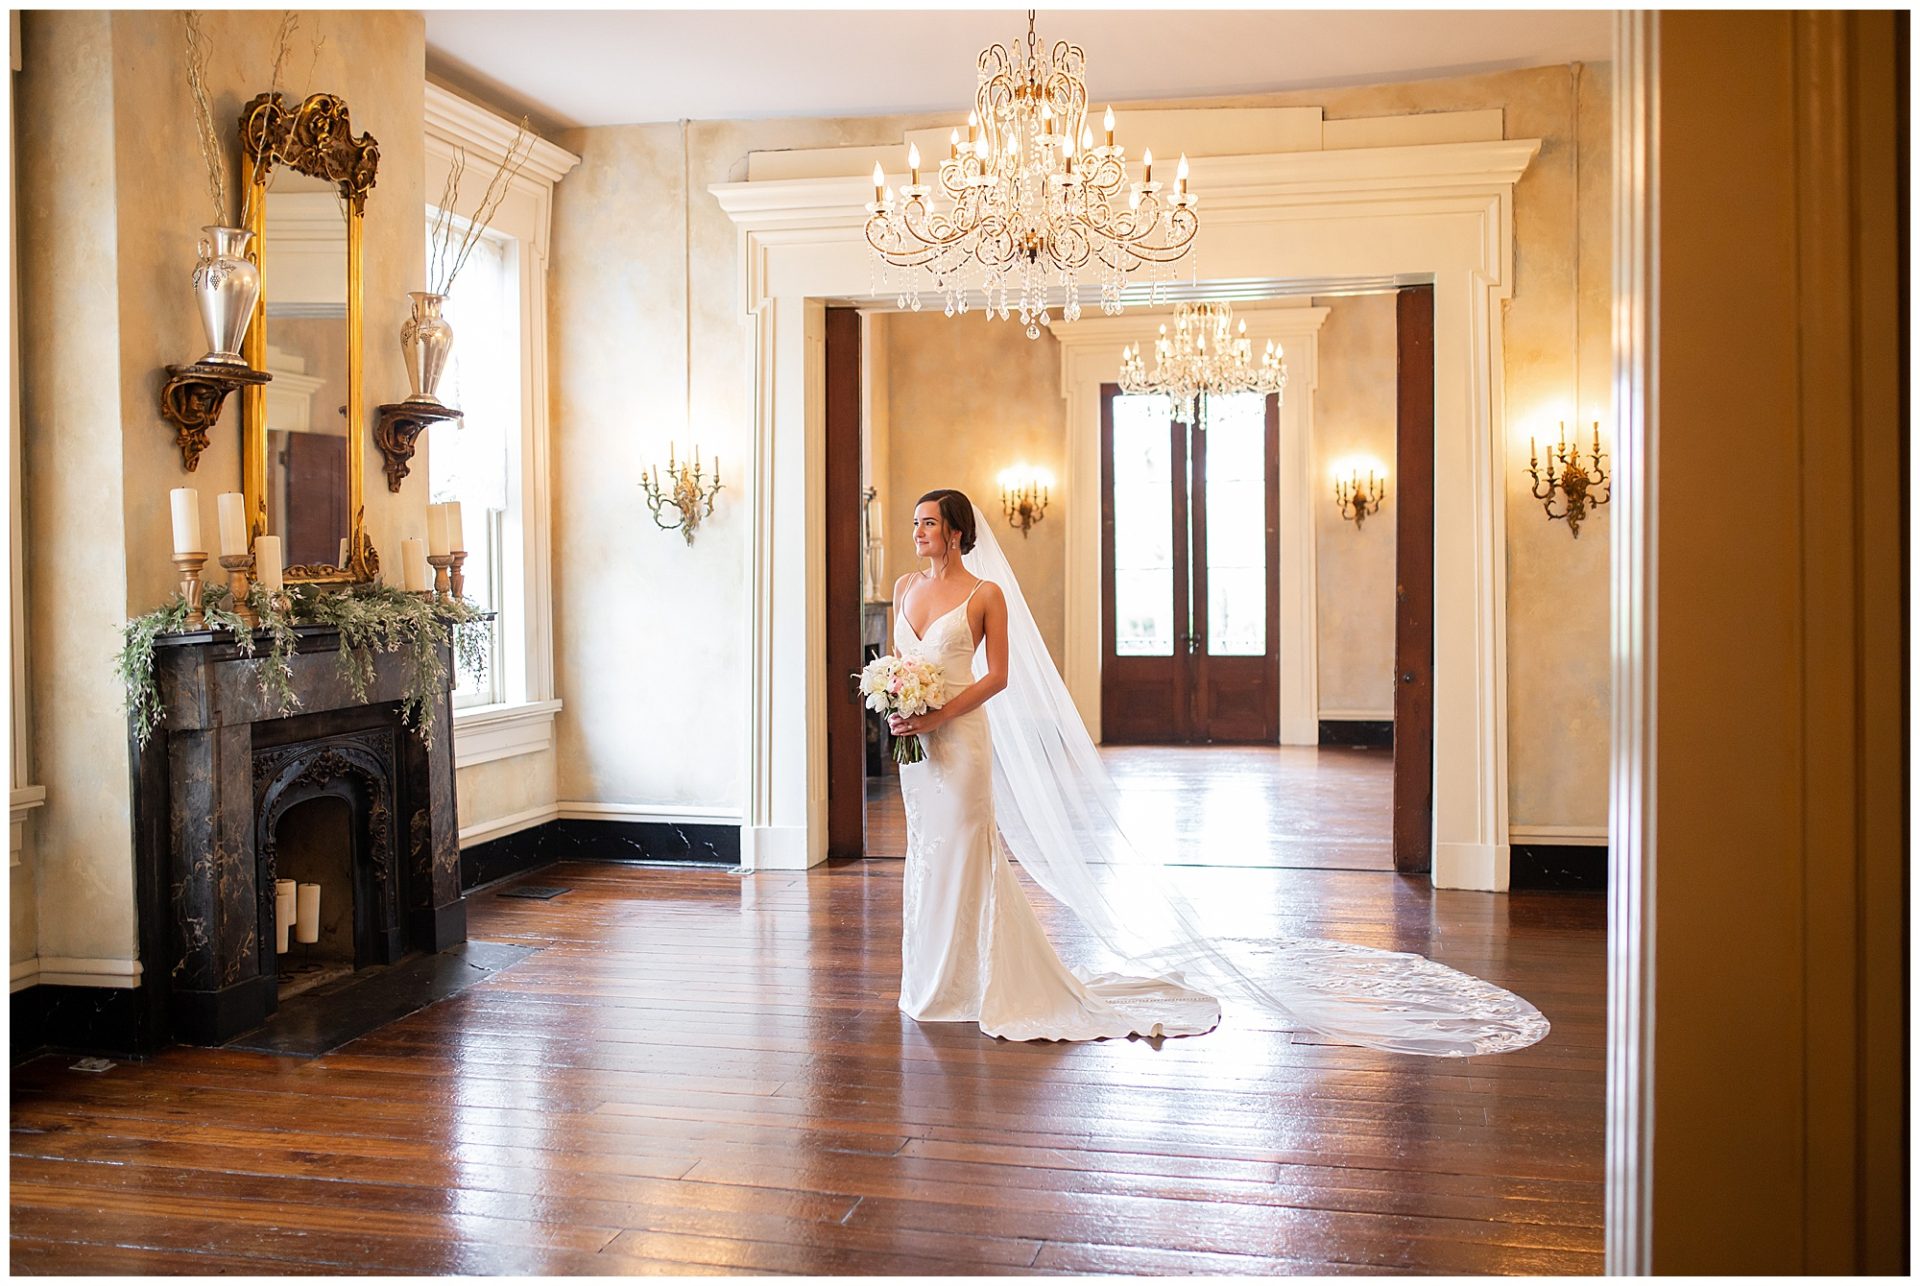 Southern Historic Mansion wedding photography at Riverwood Mansion